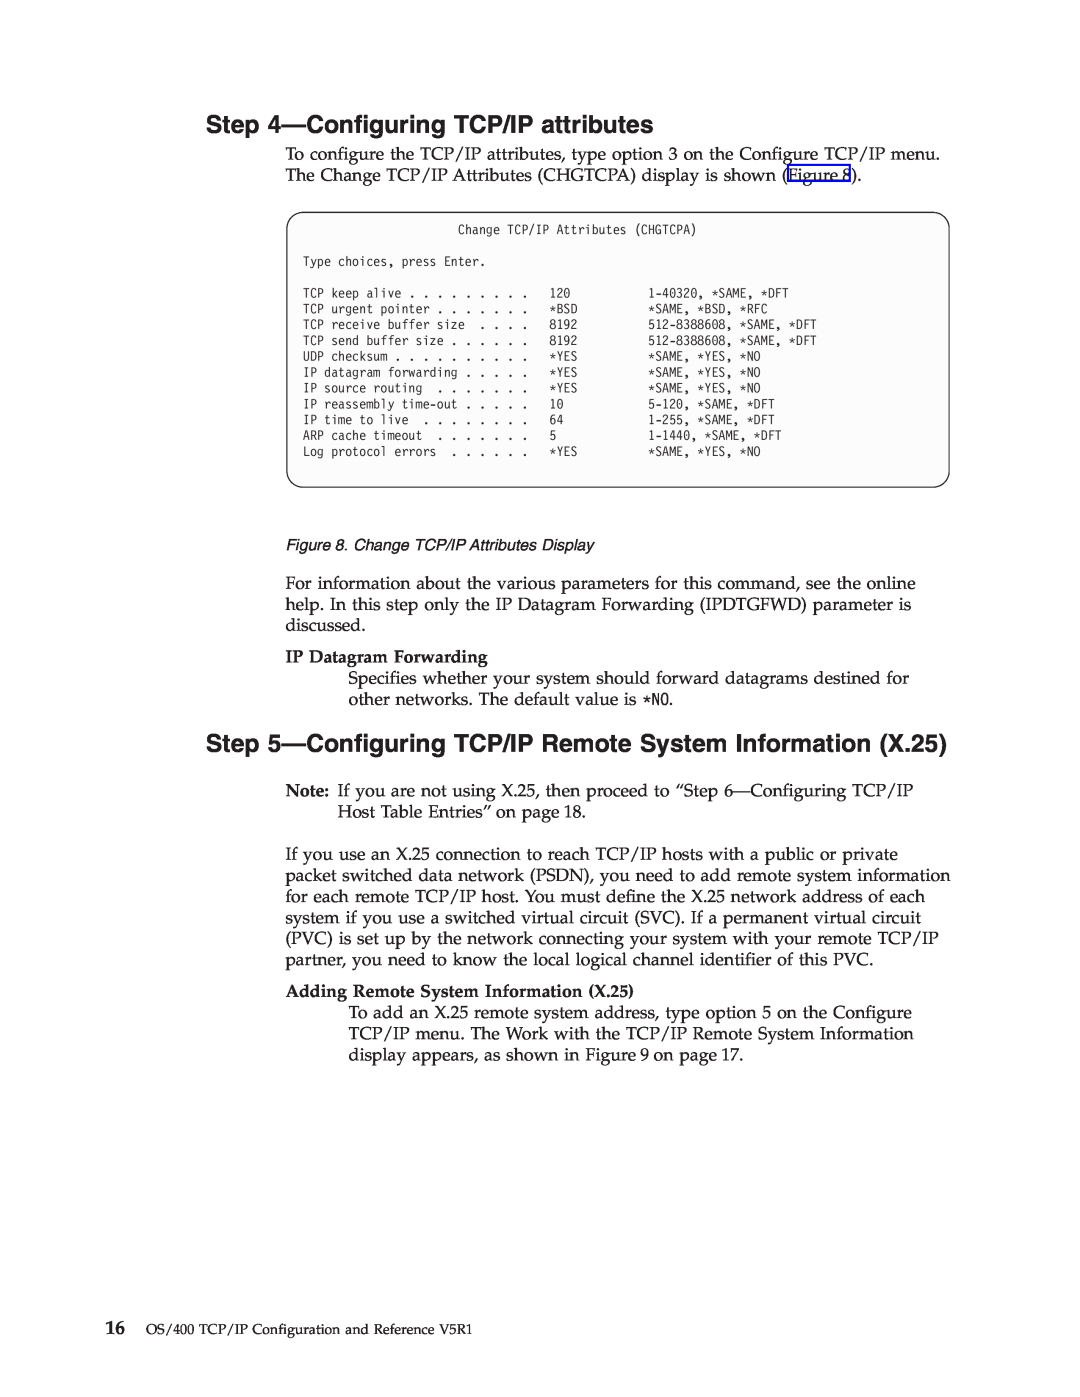 IBM SC41-5420-04 manual ConfiguringTCP/IP attributes, IP Datagram Forwarding, Adding Remote System Information 